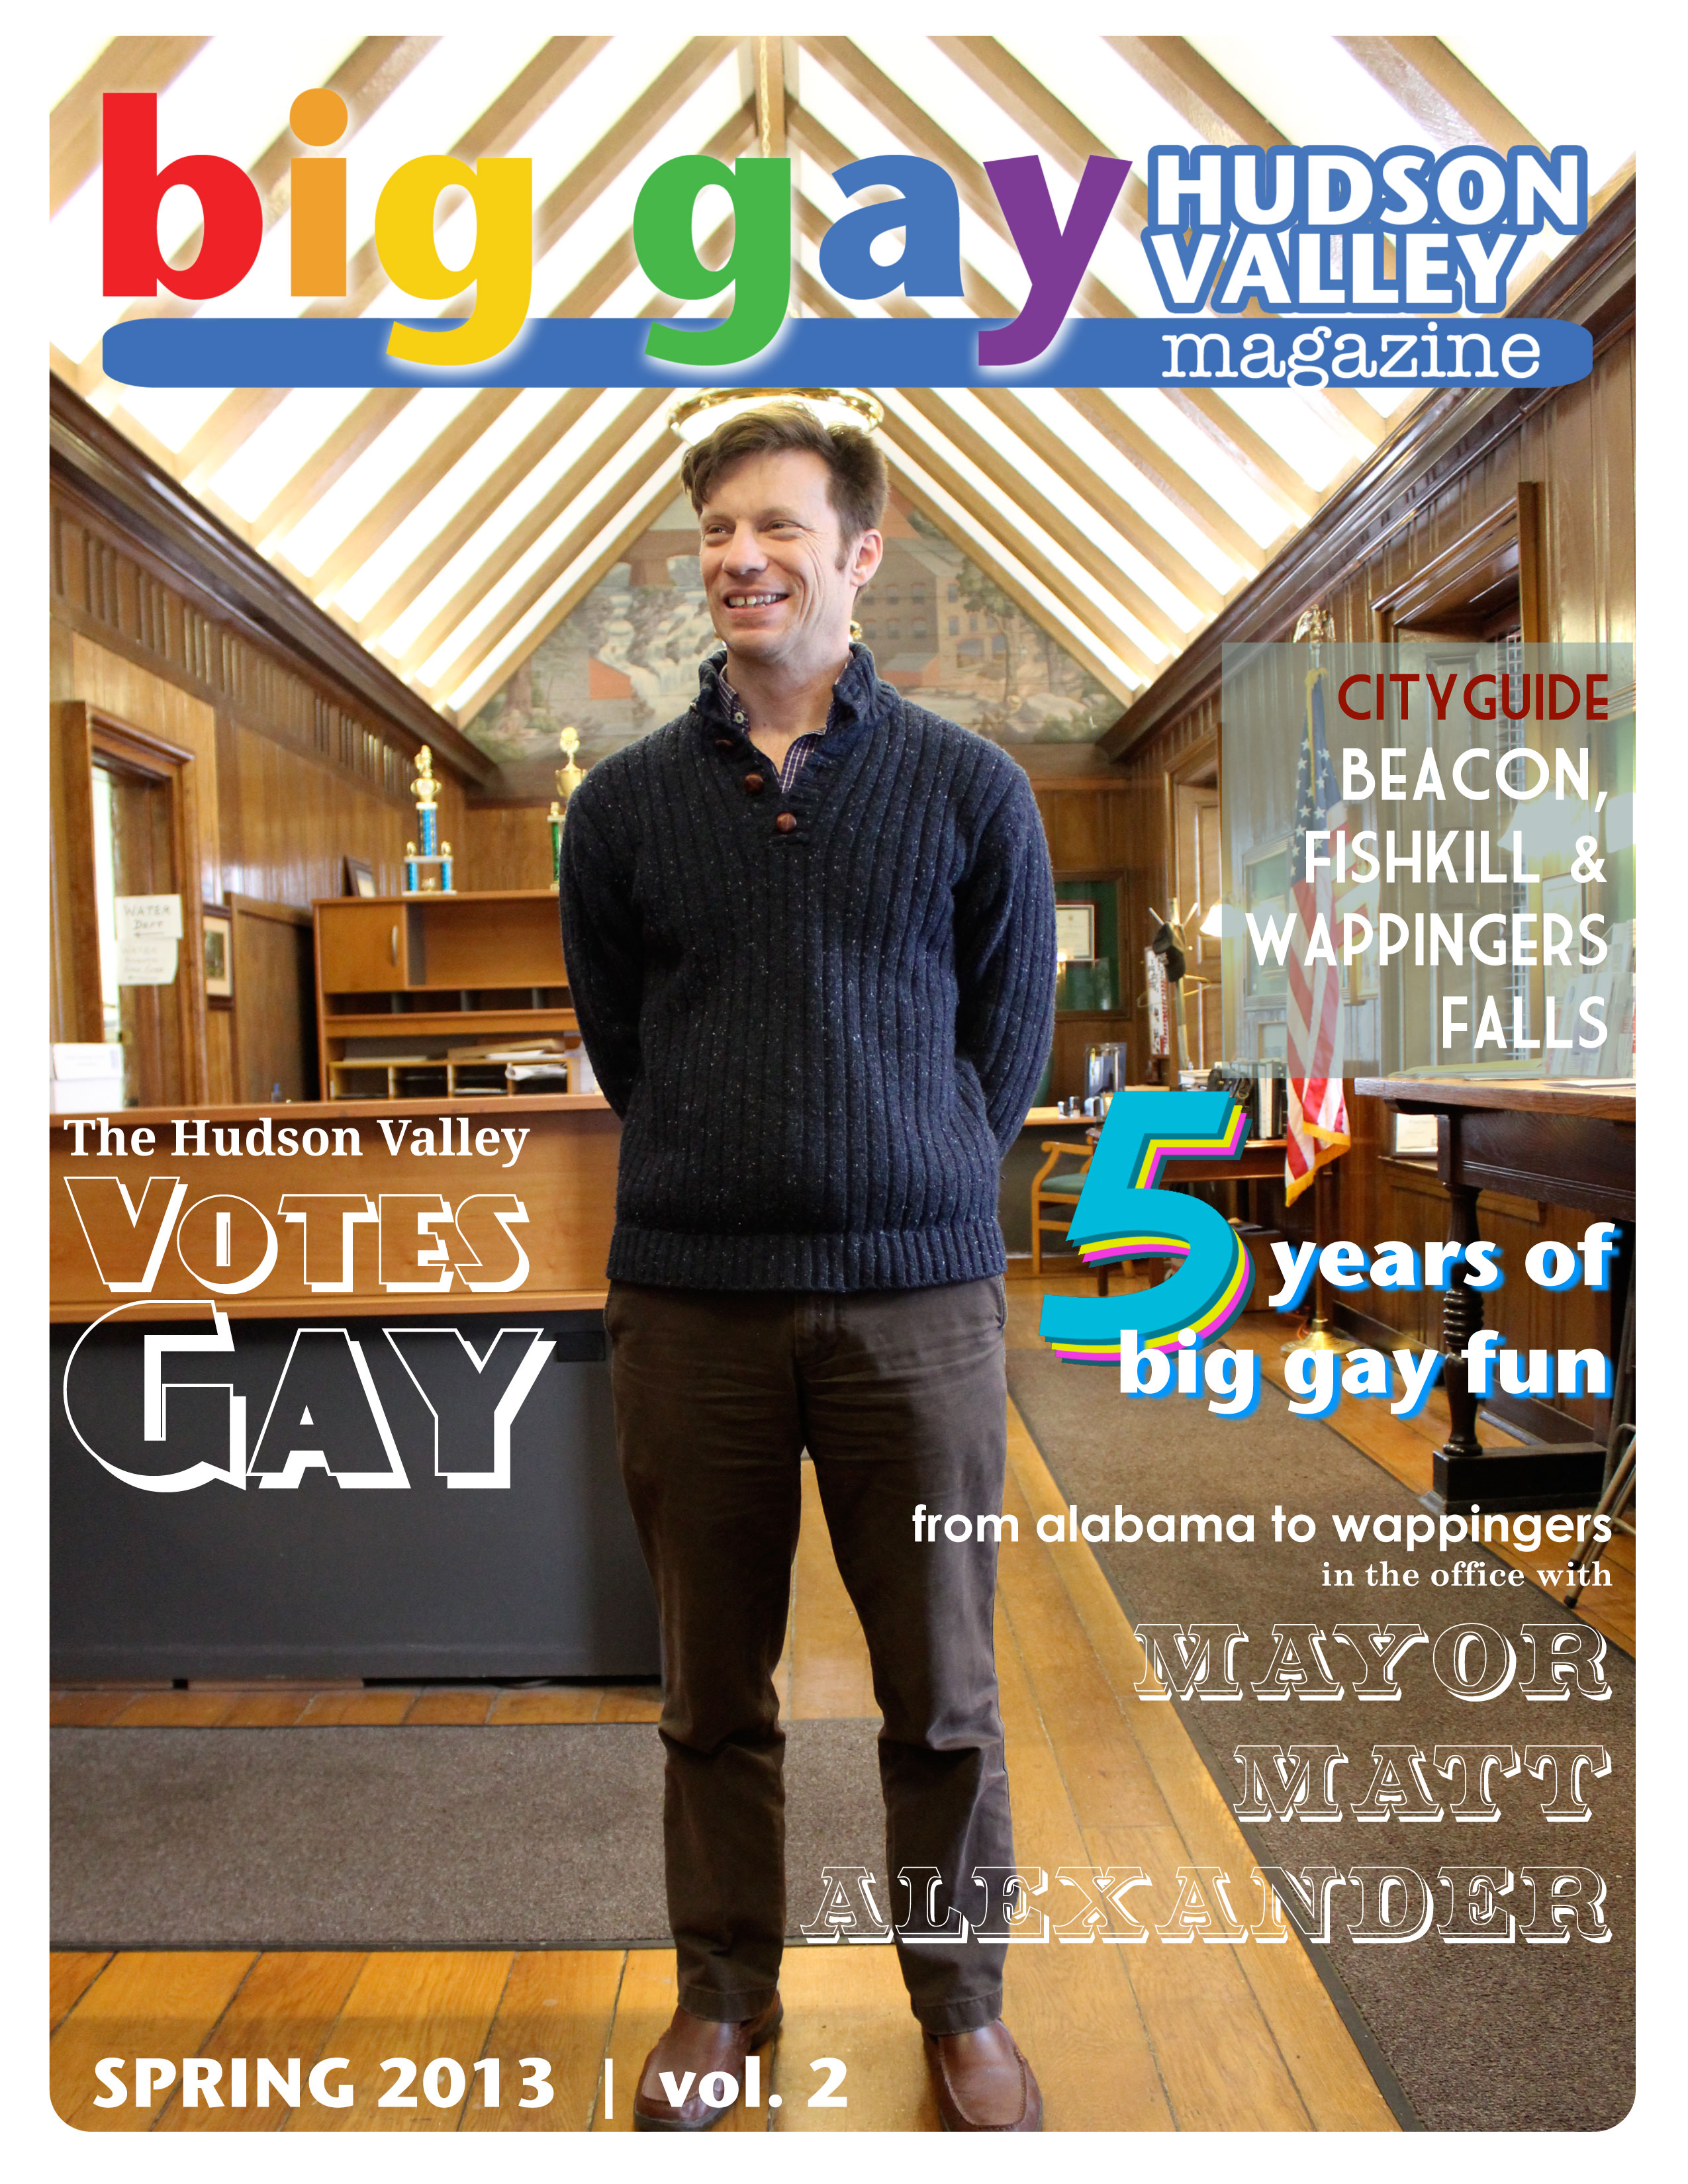 BGHV Magazine Spring 2013 Issue 2